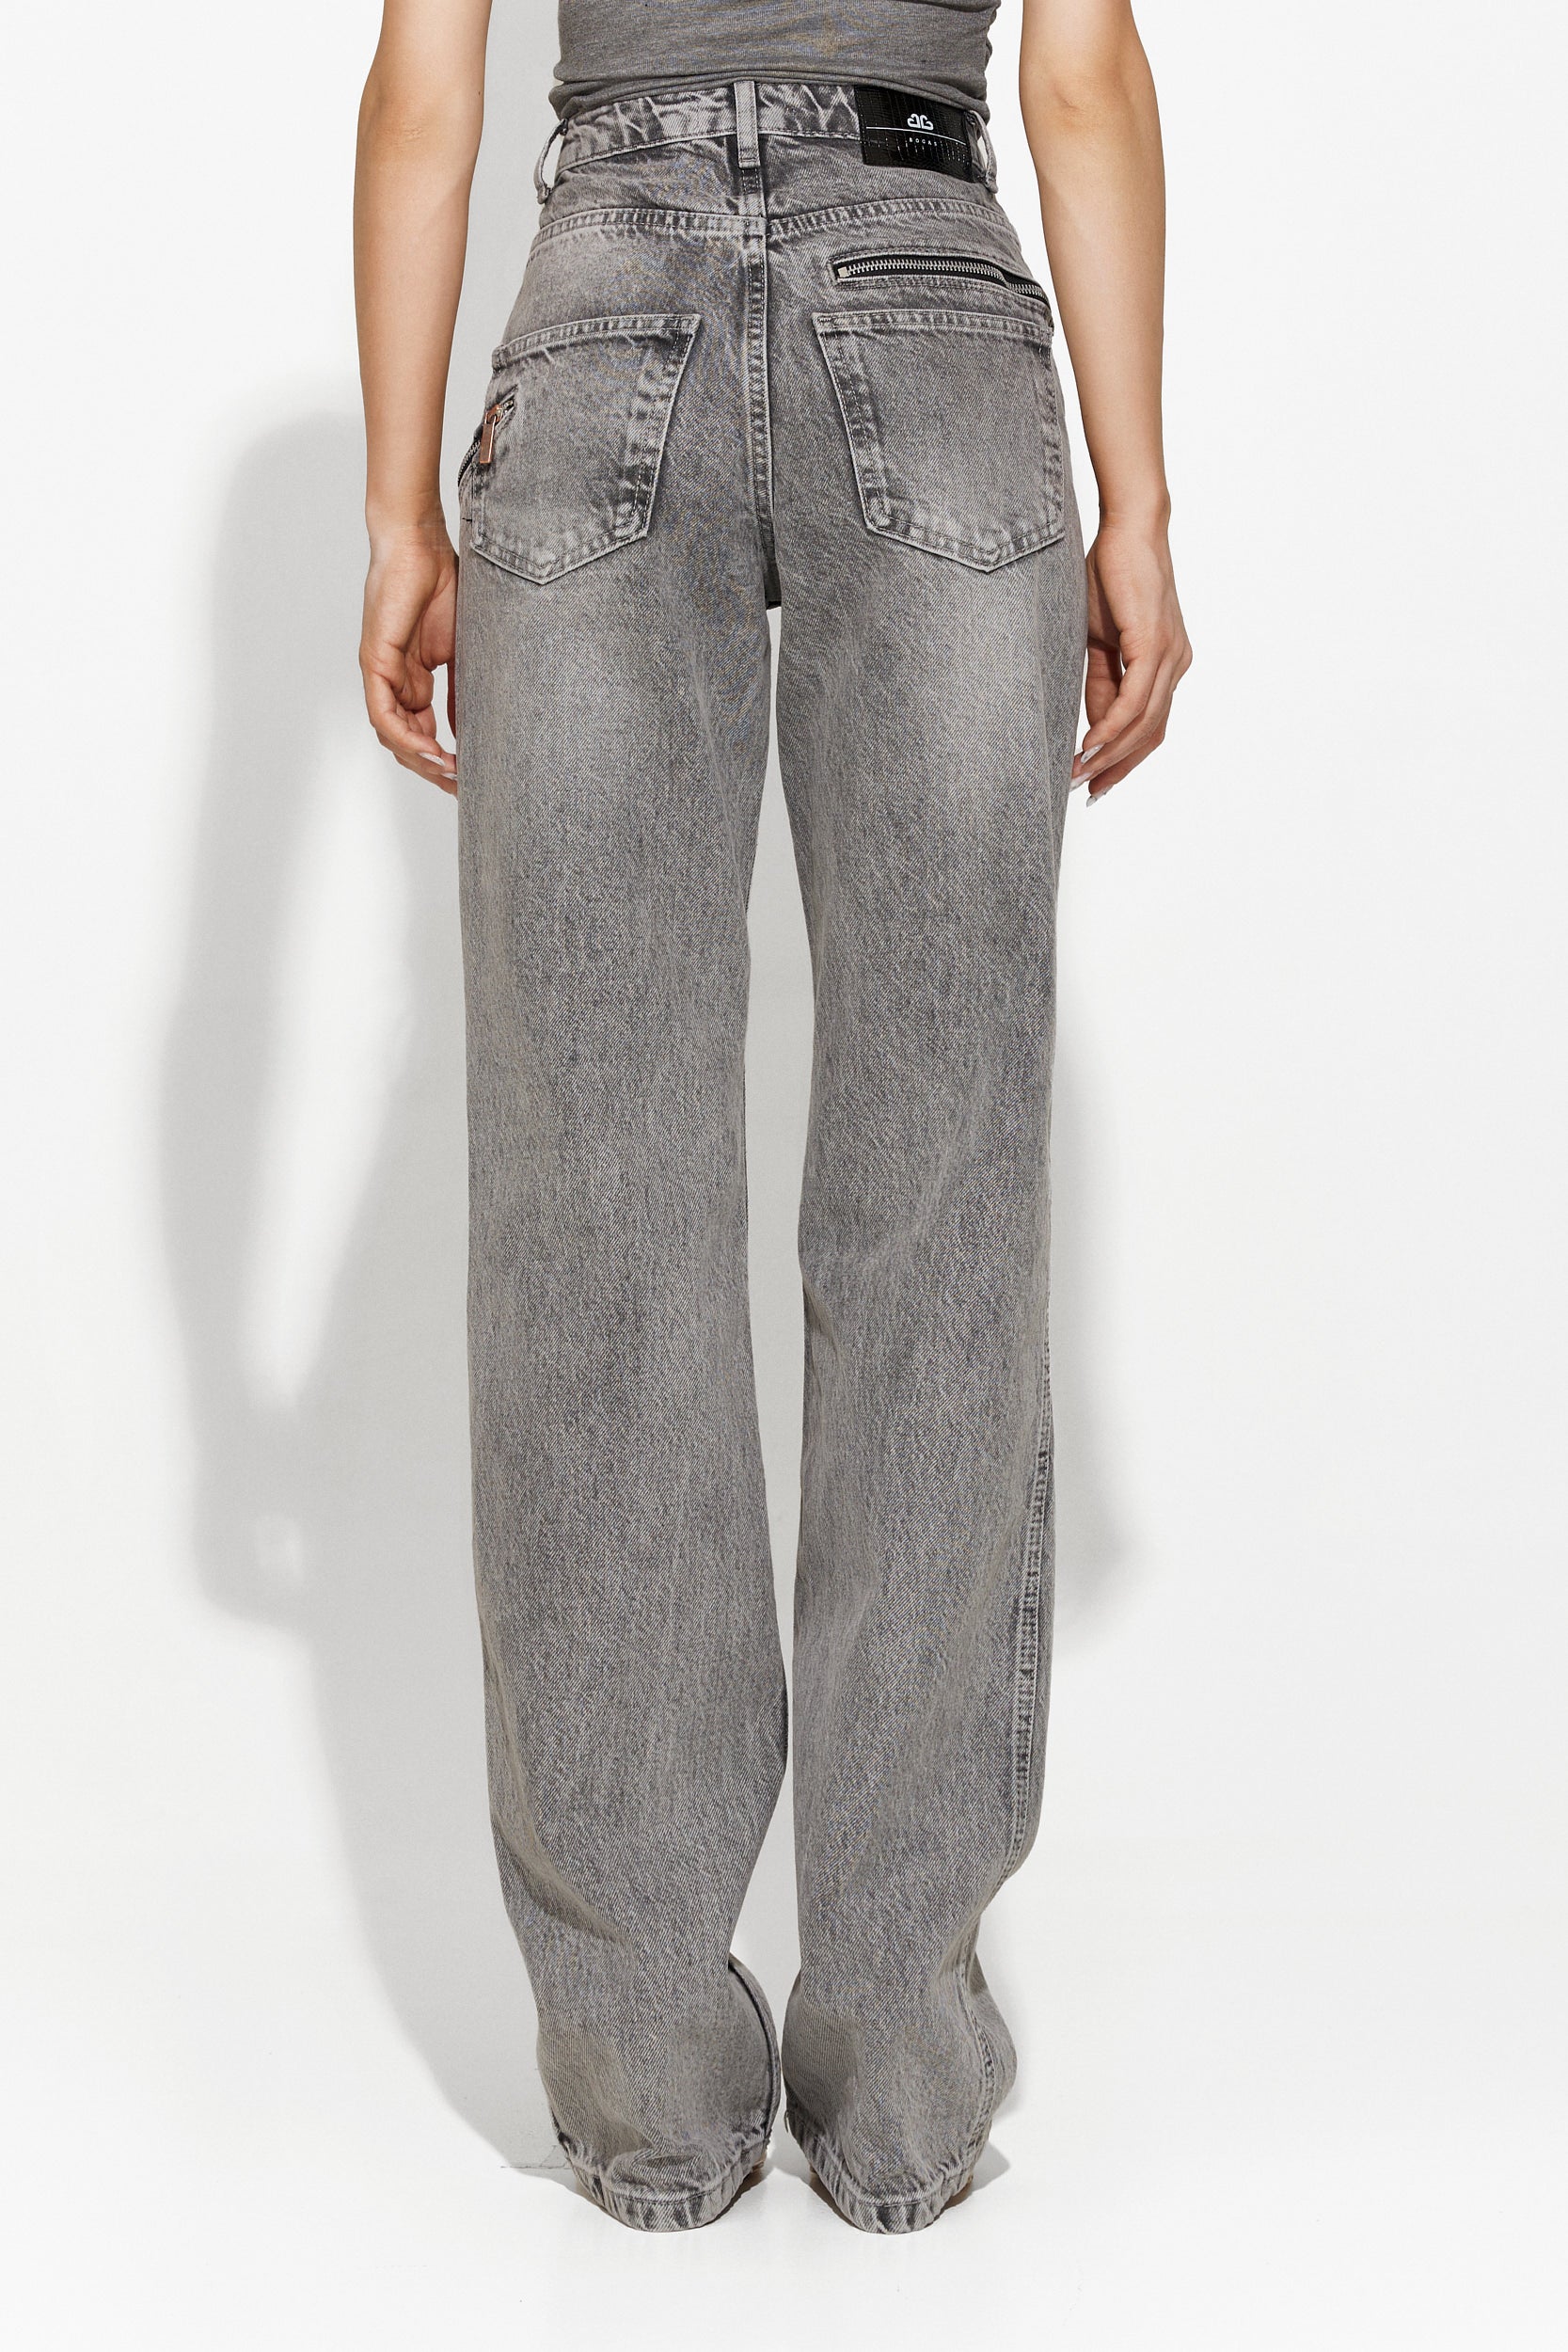 Veyoza Bogas grey casual women's jeans